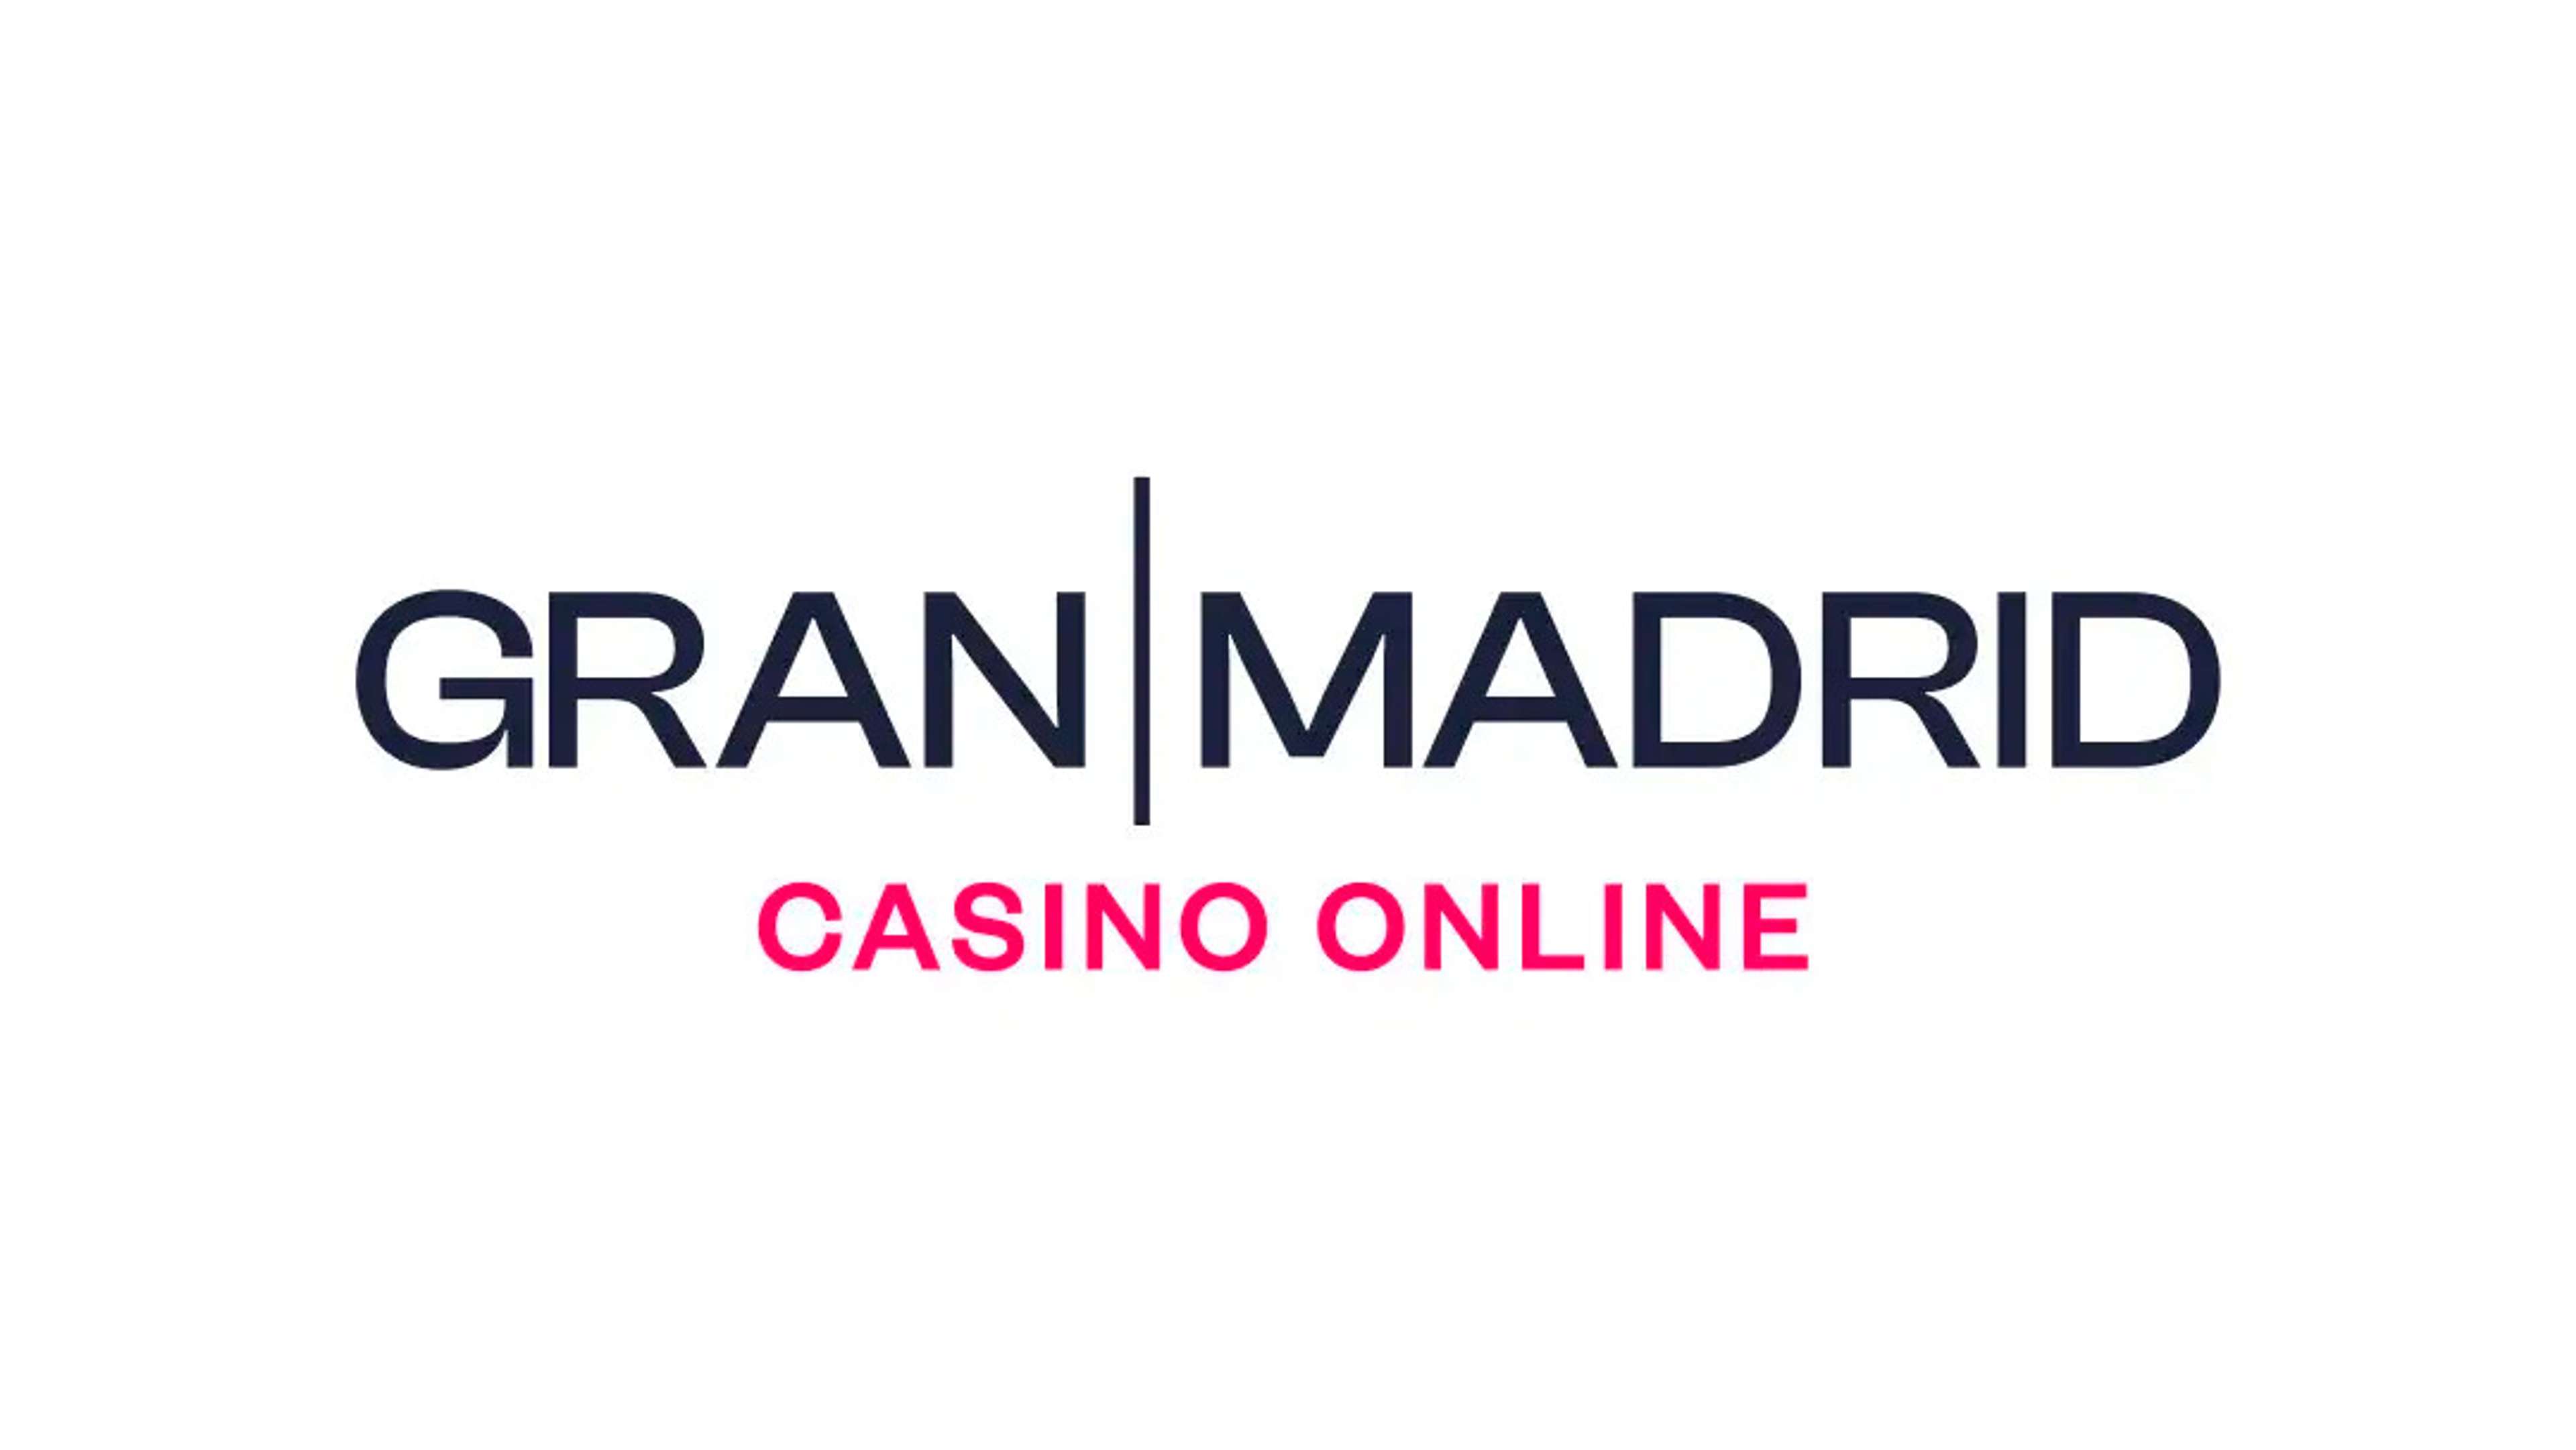 Casino Gran Madrid Bono Bienvenida Casino